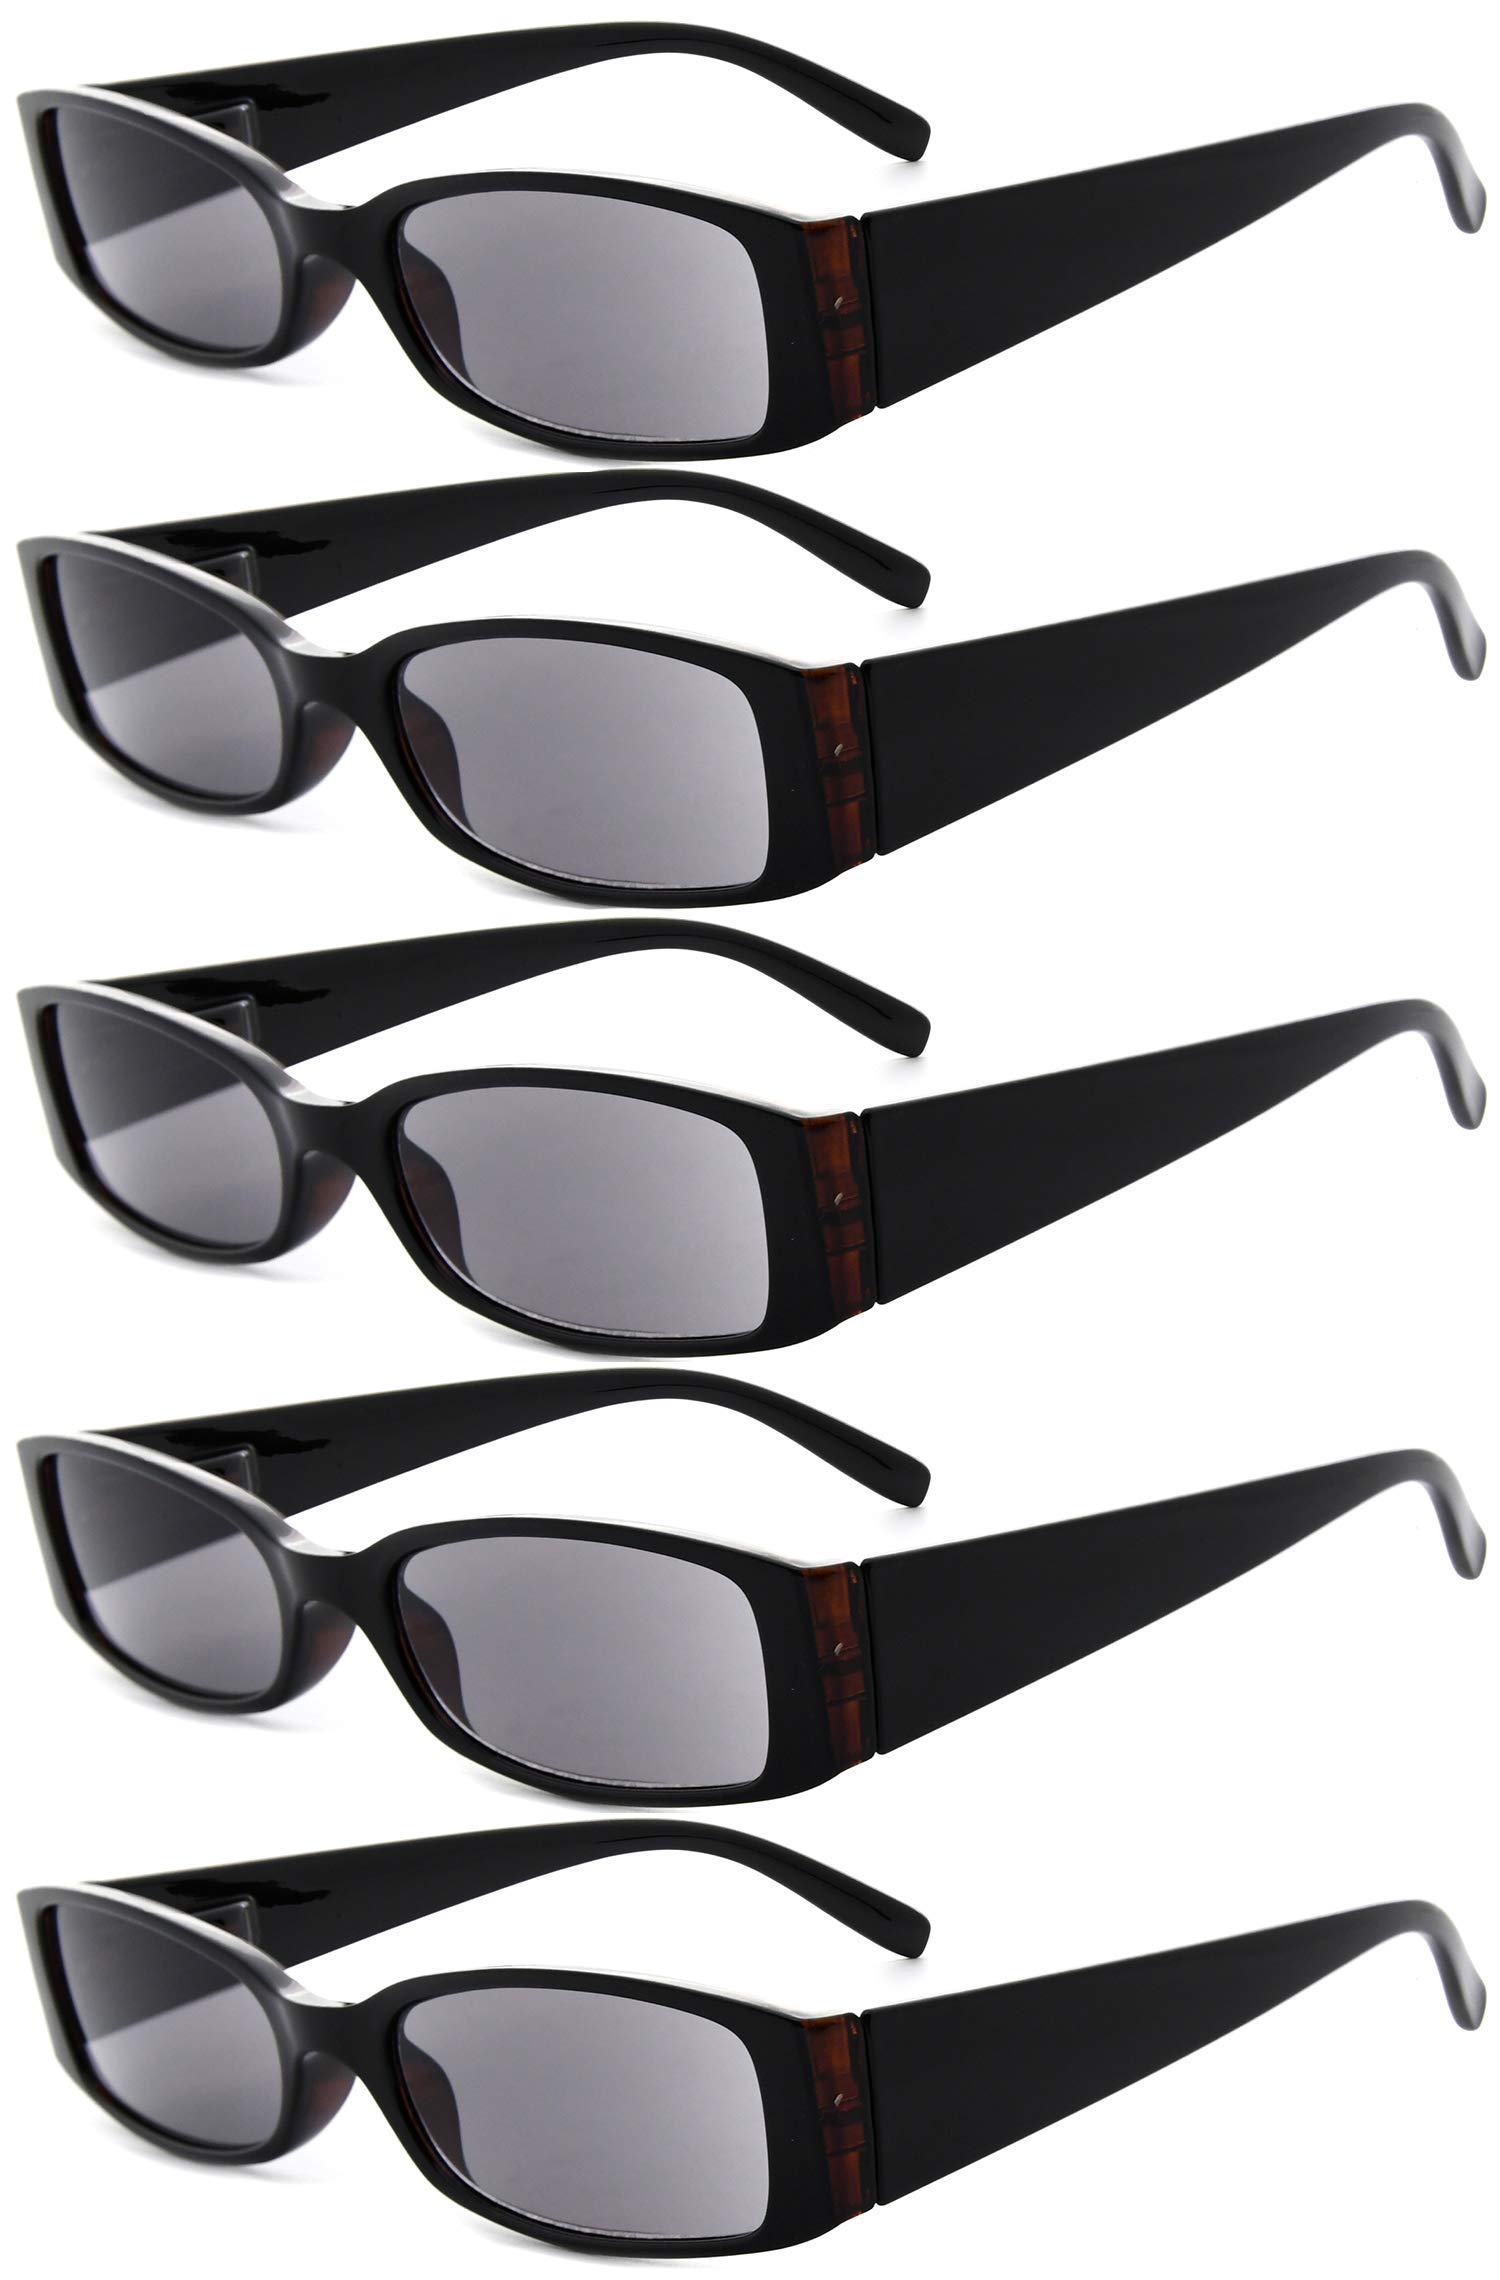 Eyekepper Federscharnier Kunststoff Lesebrille (5 Stuecke) Sonnenbrillen Leser, Grau